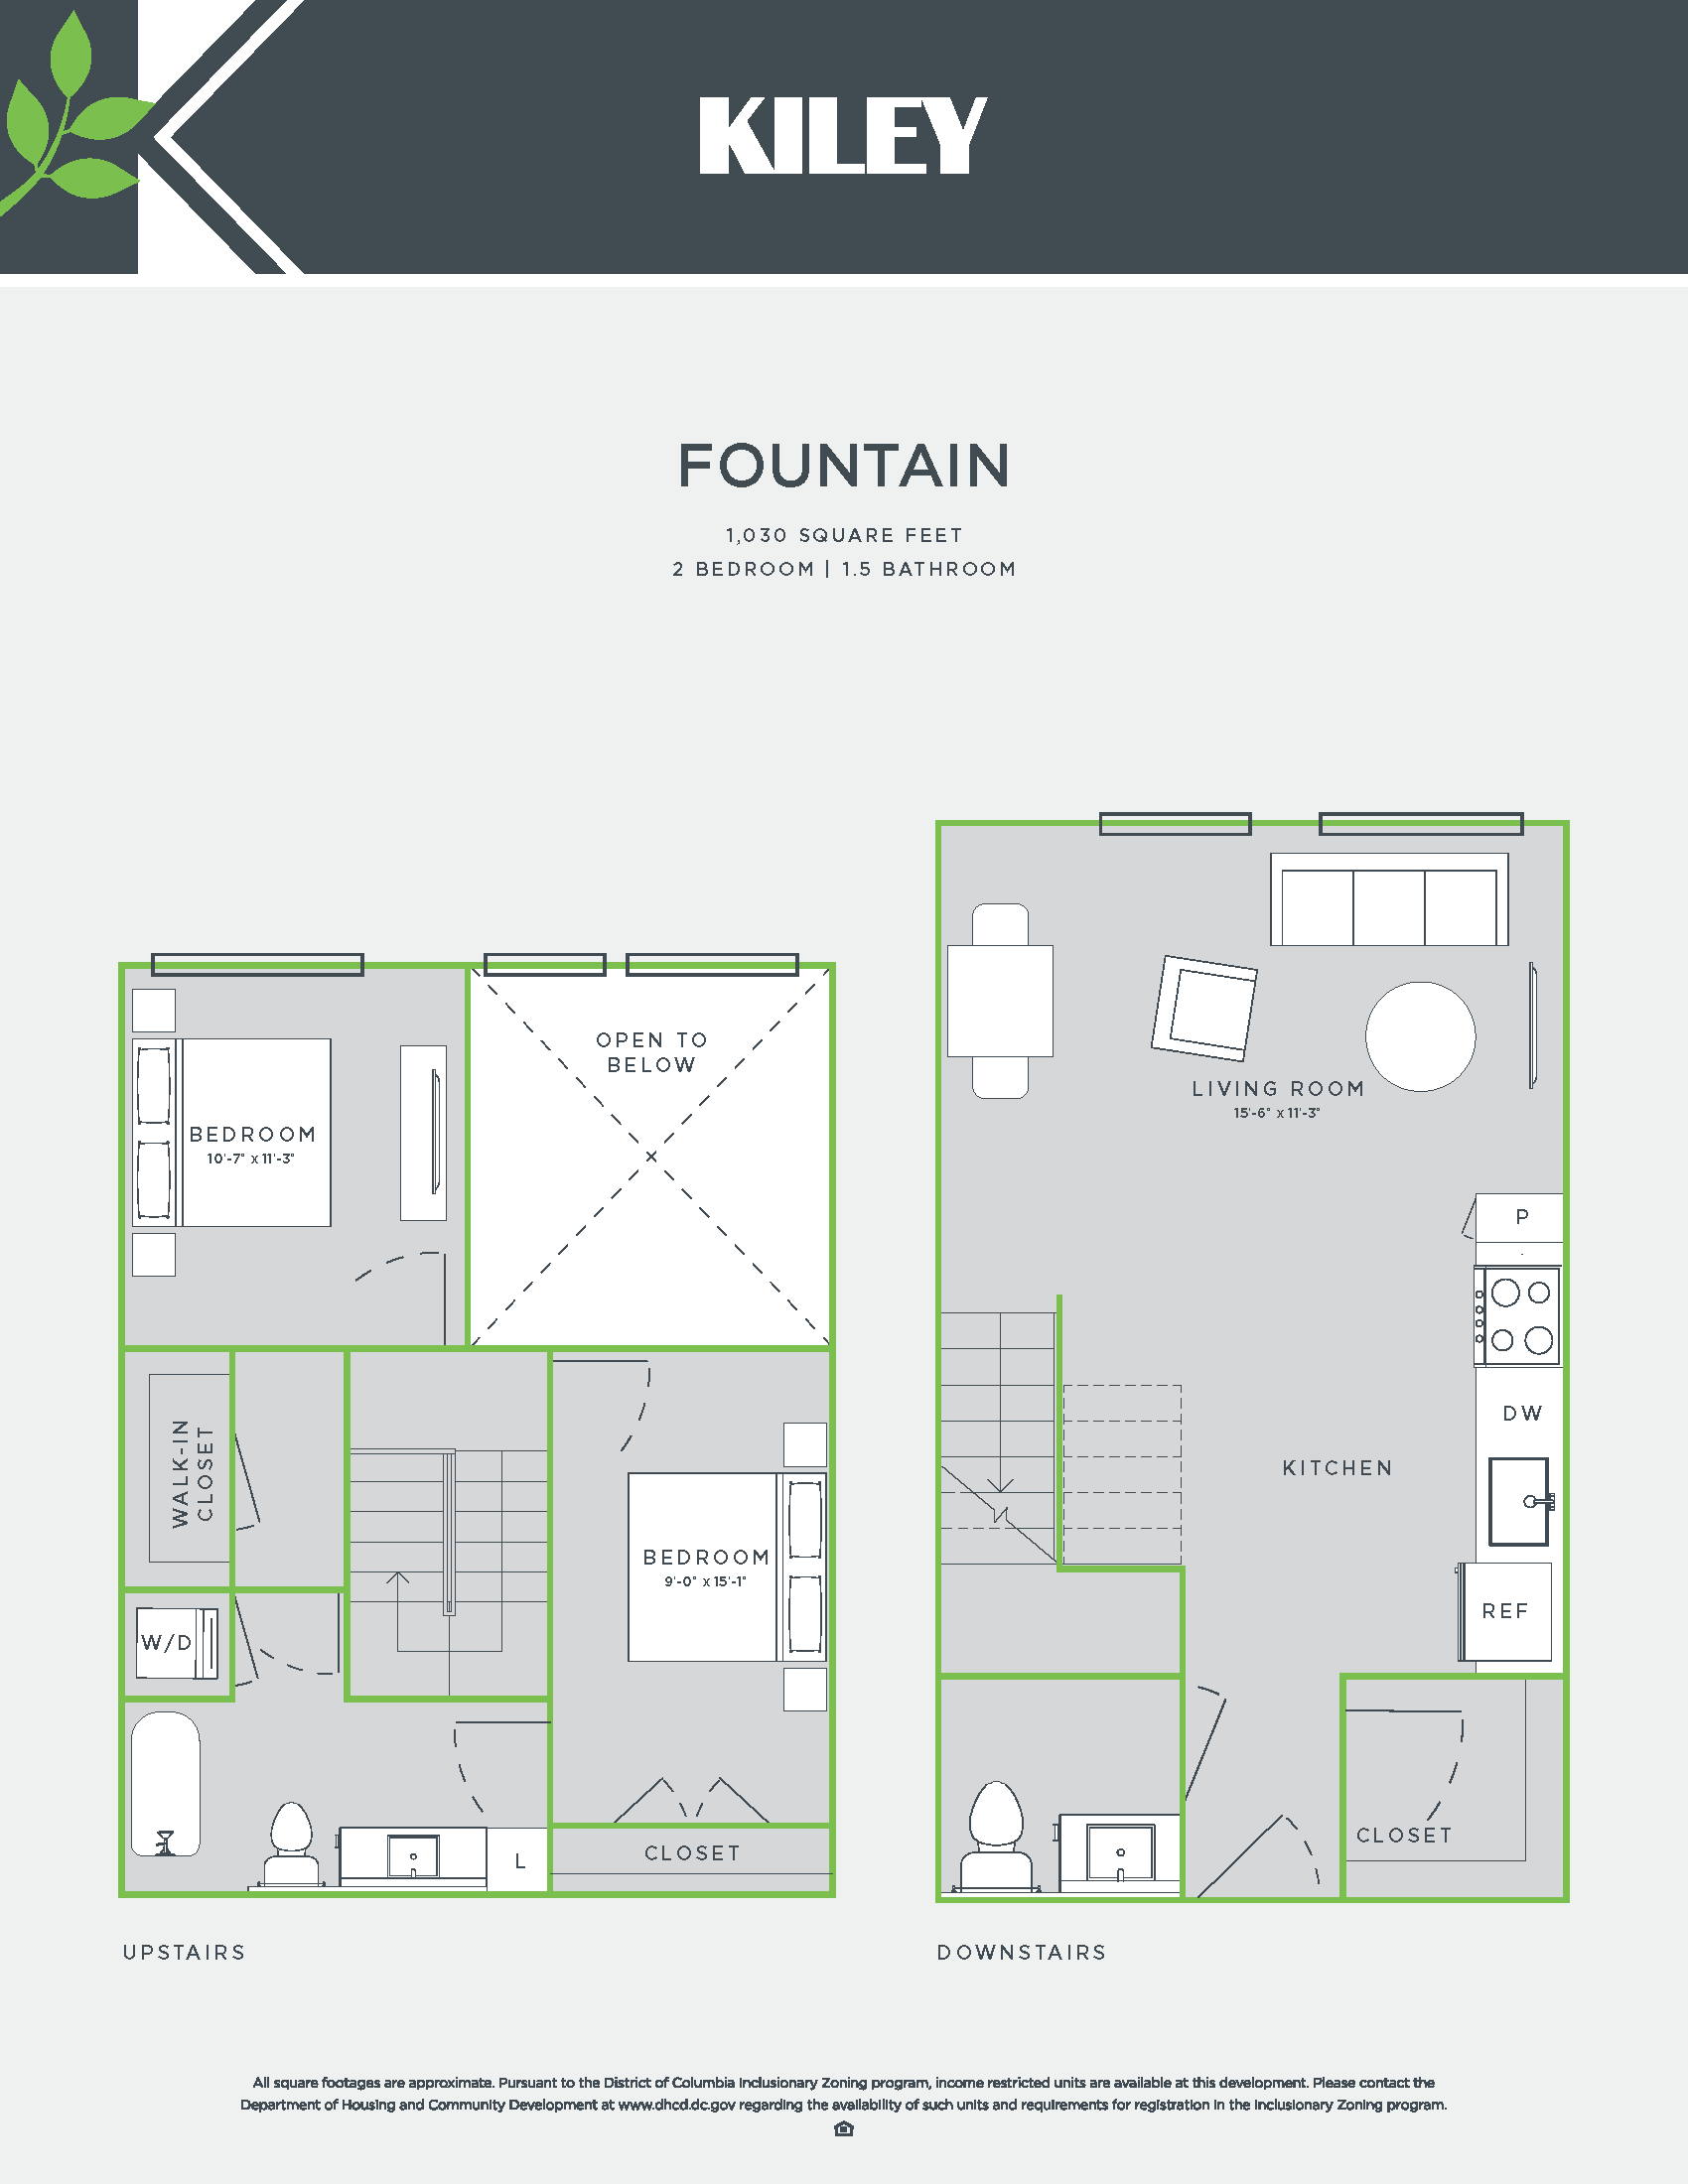 Fountain (2 bed /1.5 bath) Floor Plan